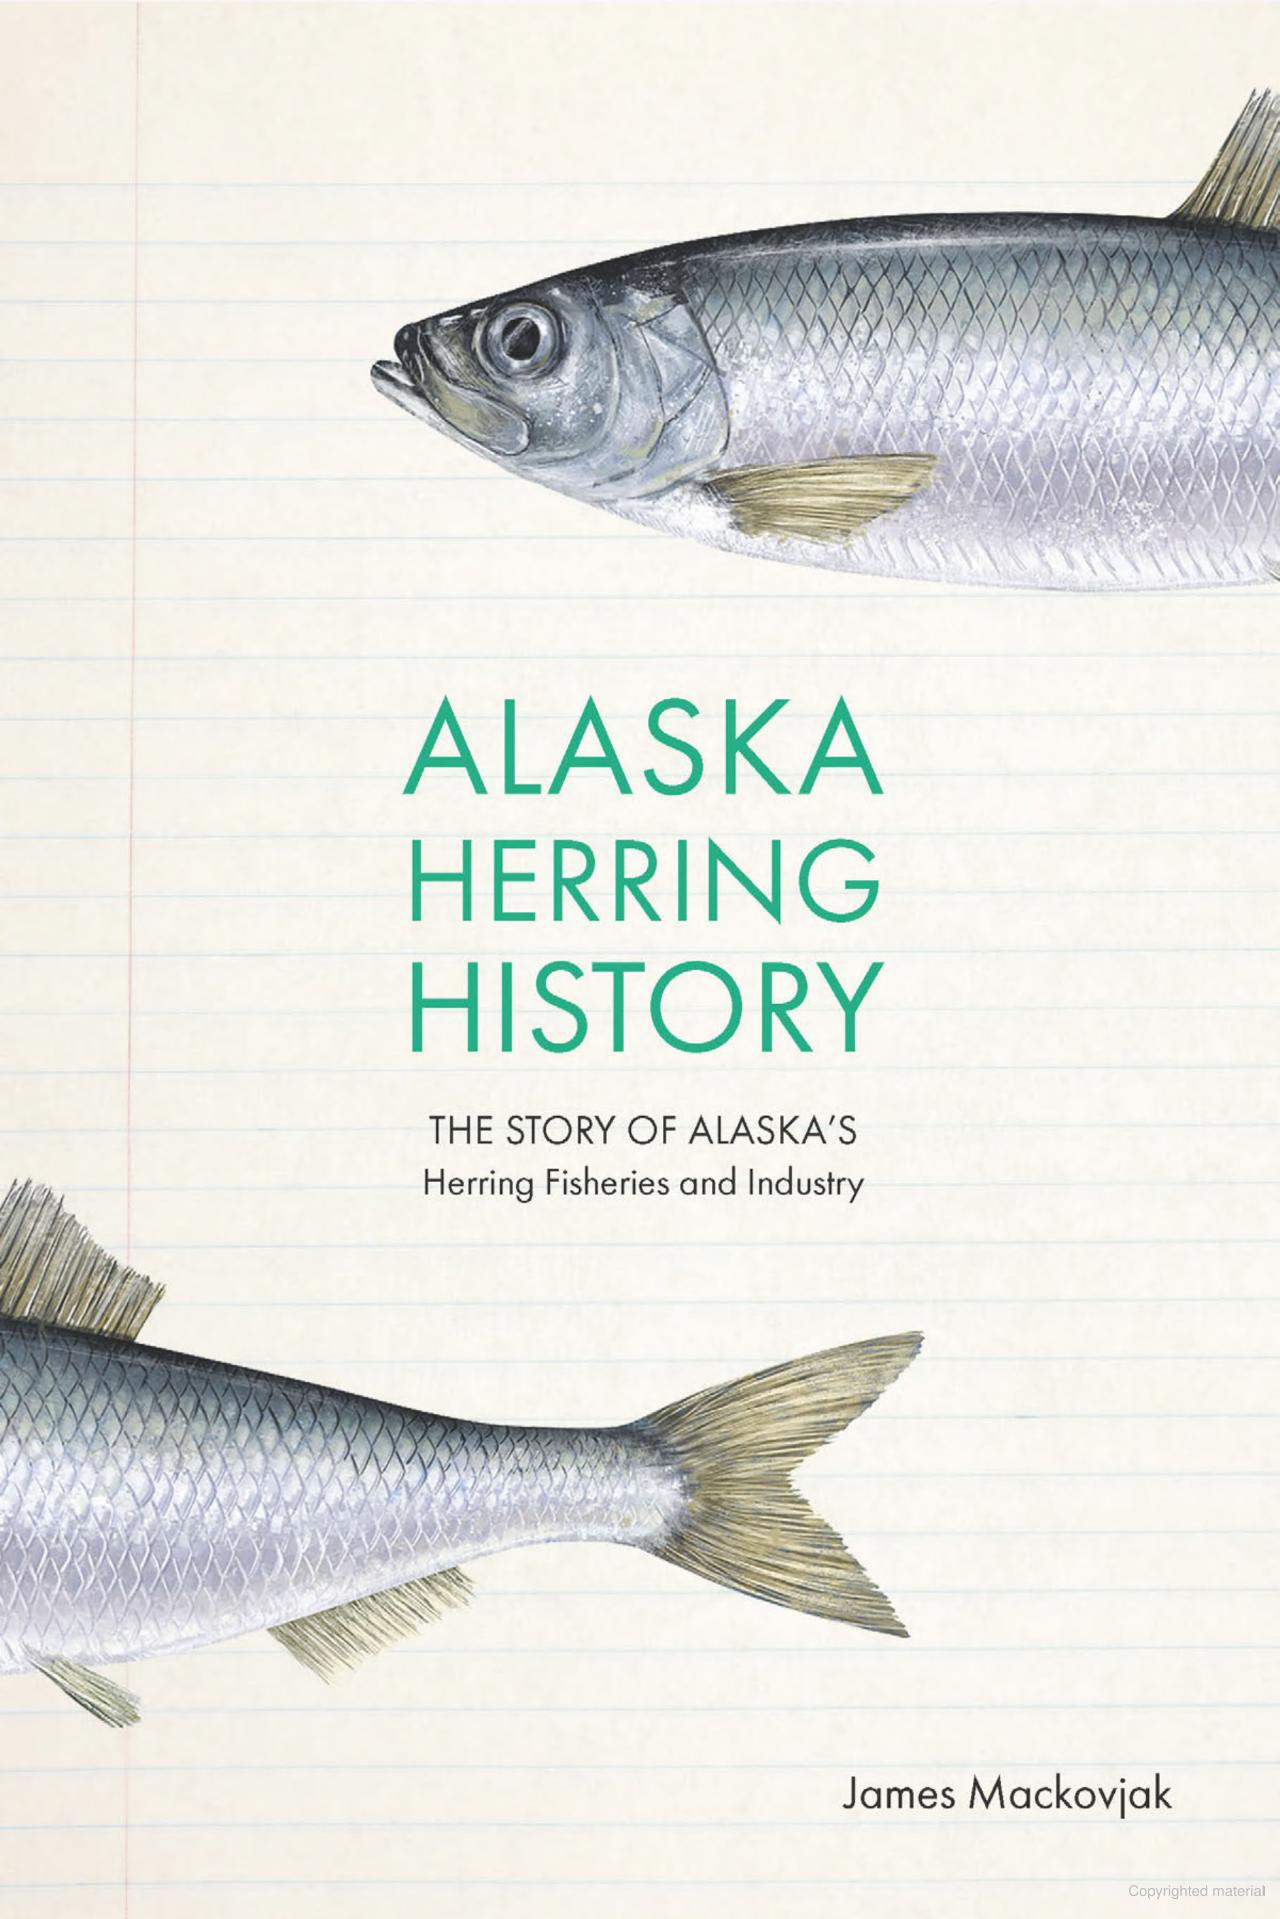 Alaska Herring Story: The Story of Alaska's Herring Fisheries and Industry